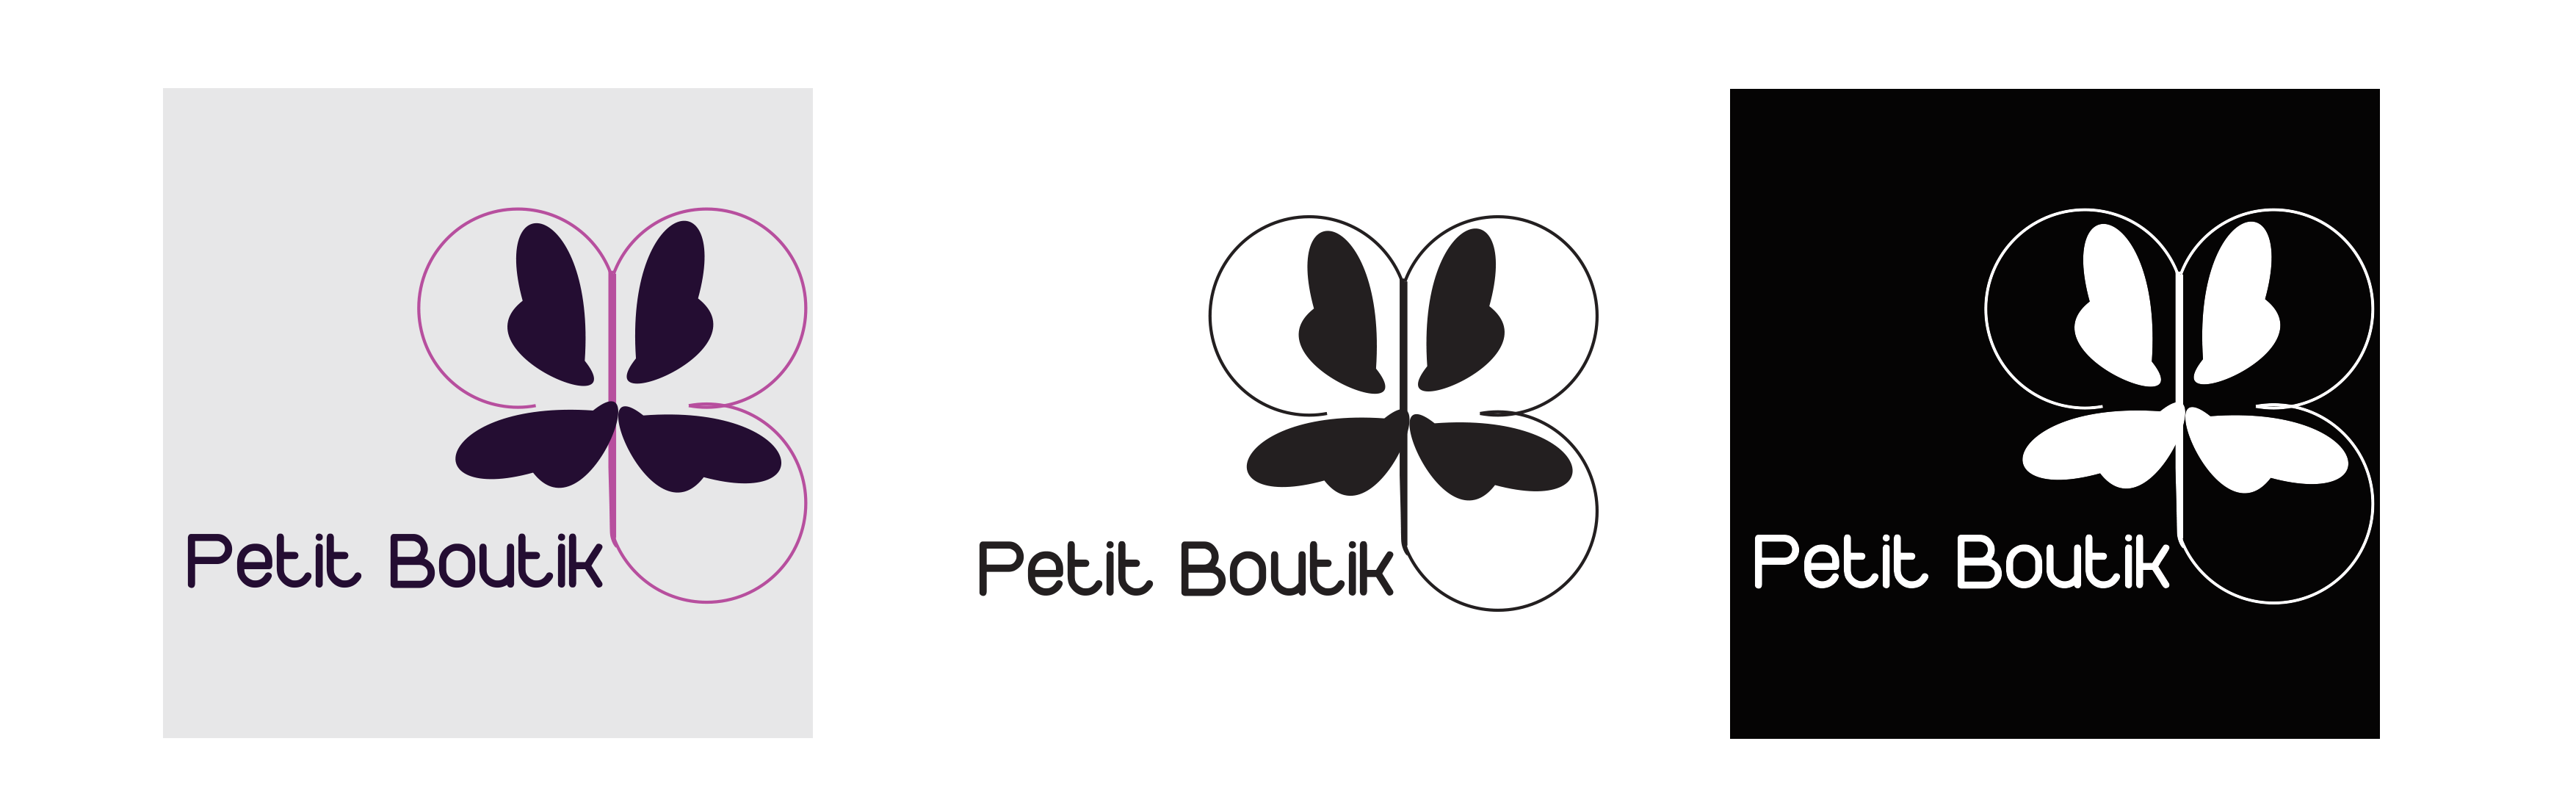 petit boutik logo variations design momenarts